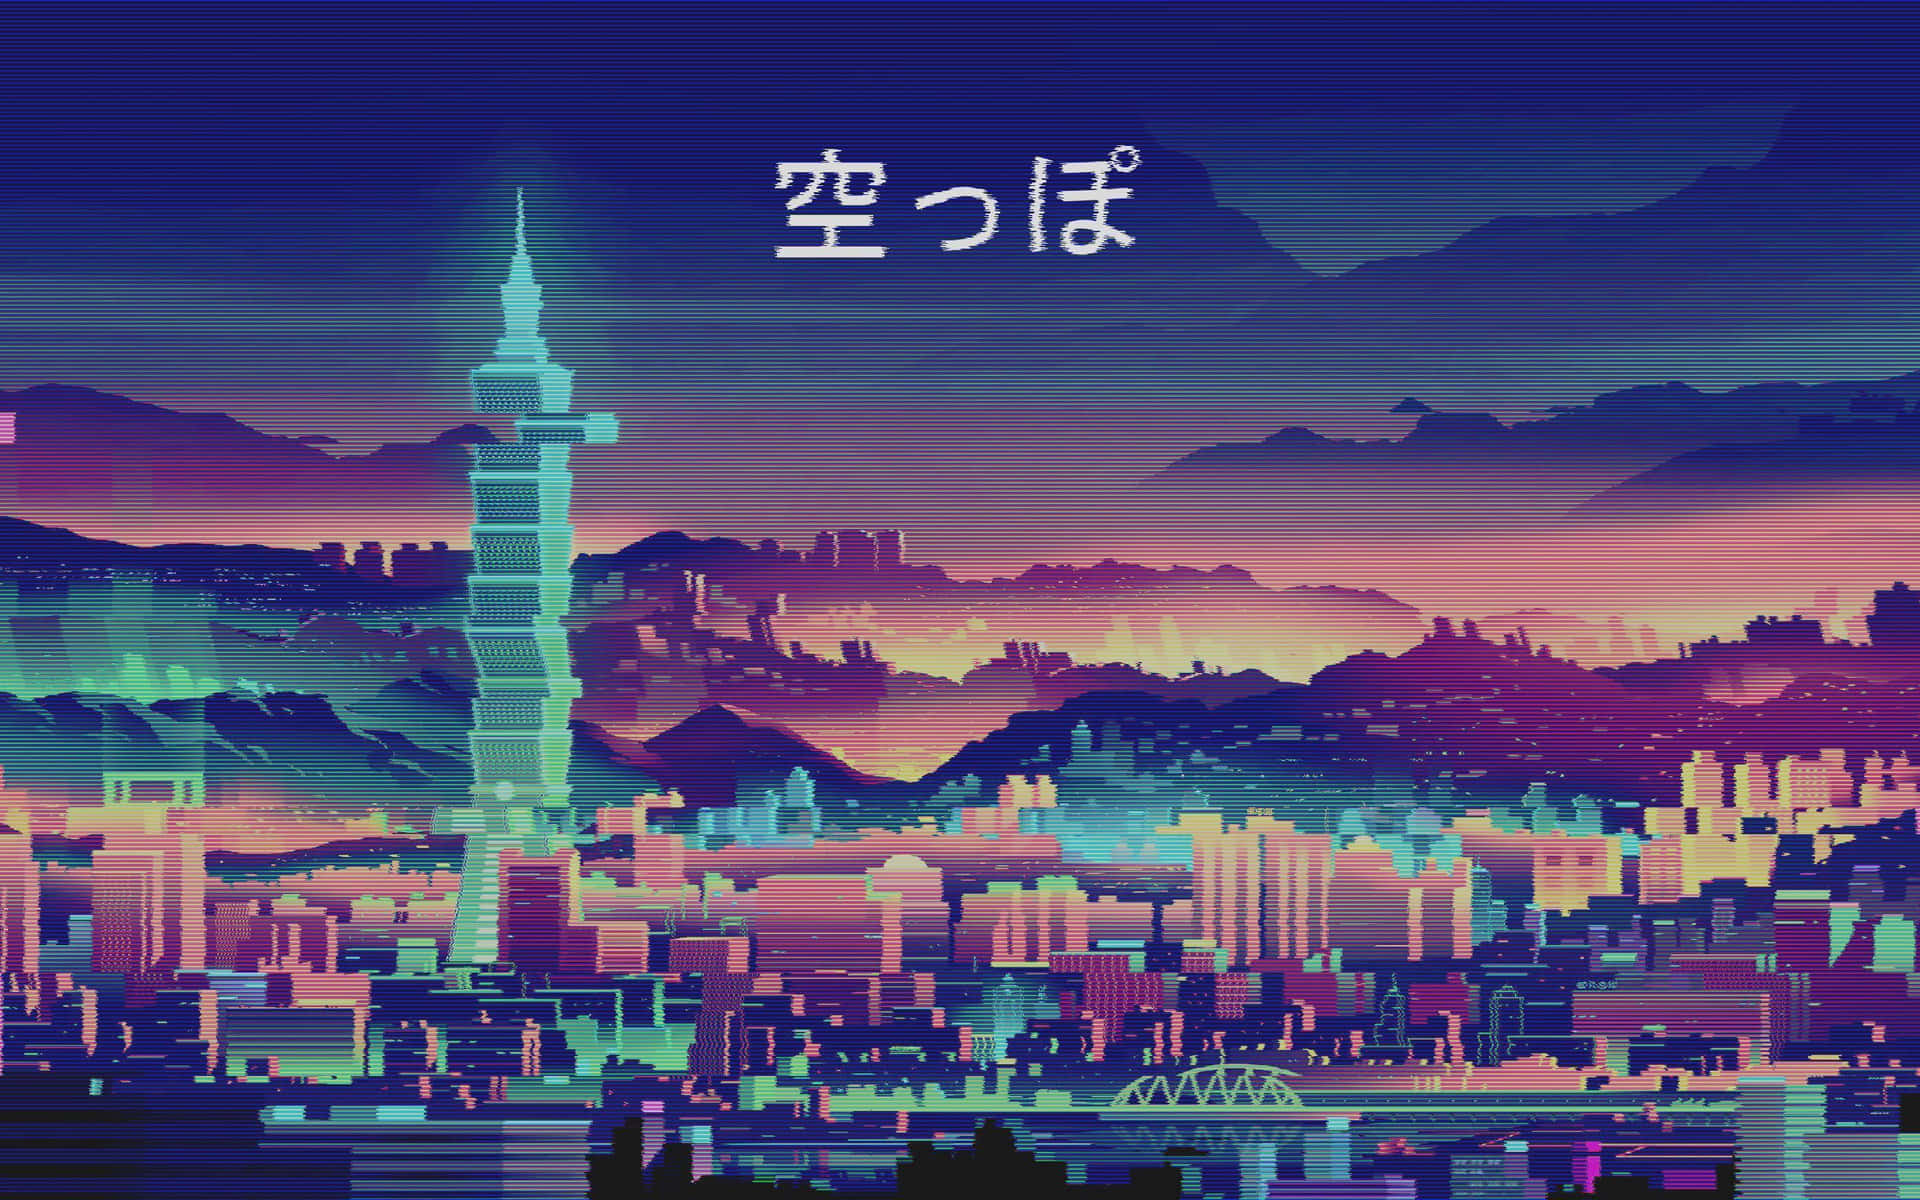 Tokyo Night - Other & Anime Background Wallpapers on Desktop Nexus (Image  1820608)